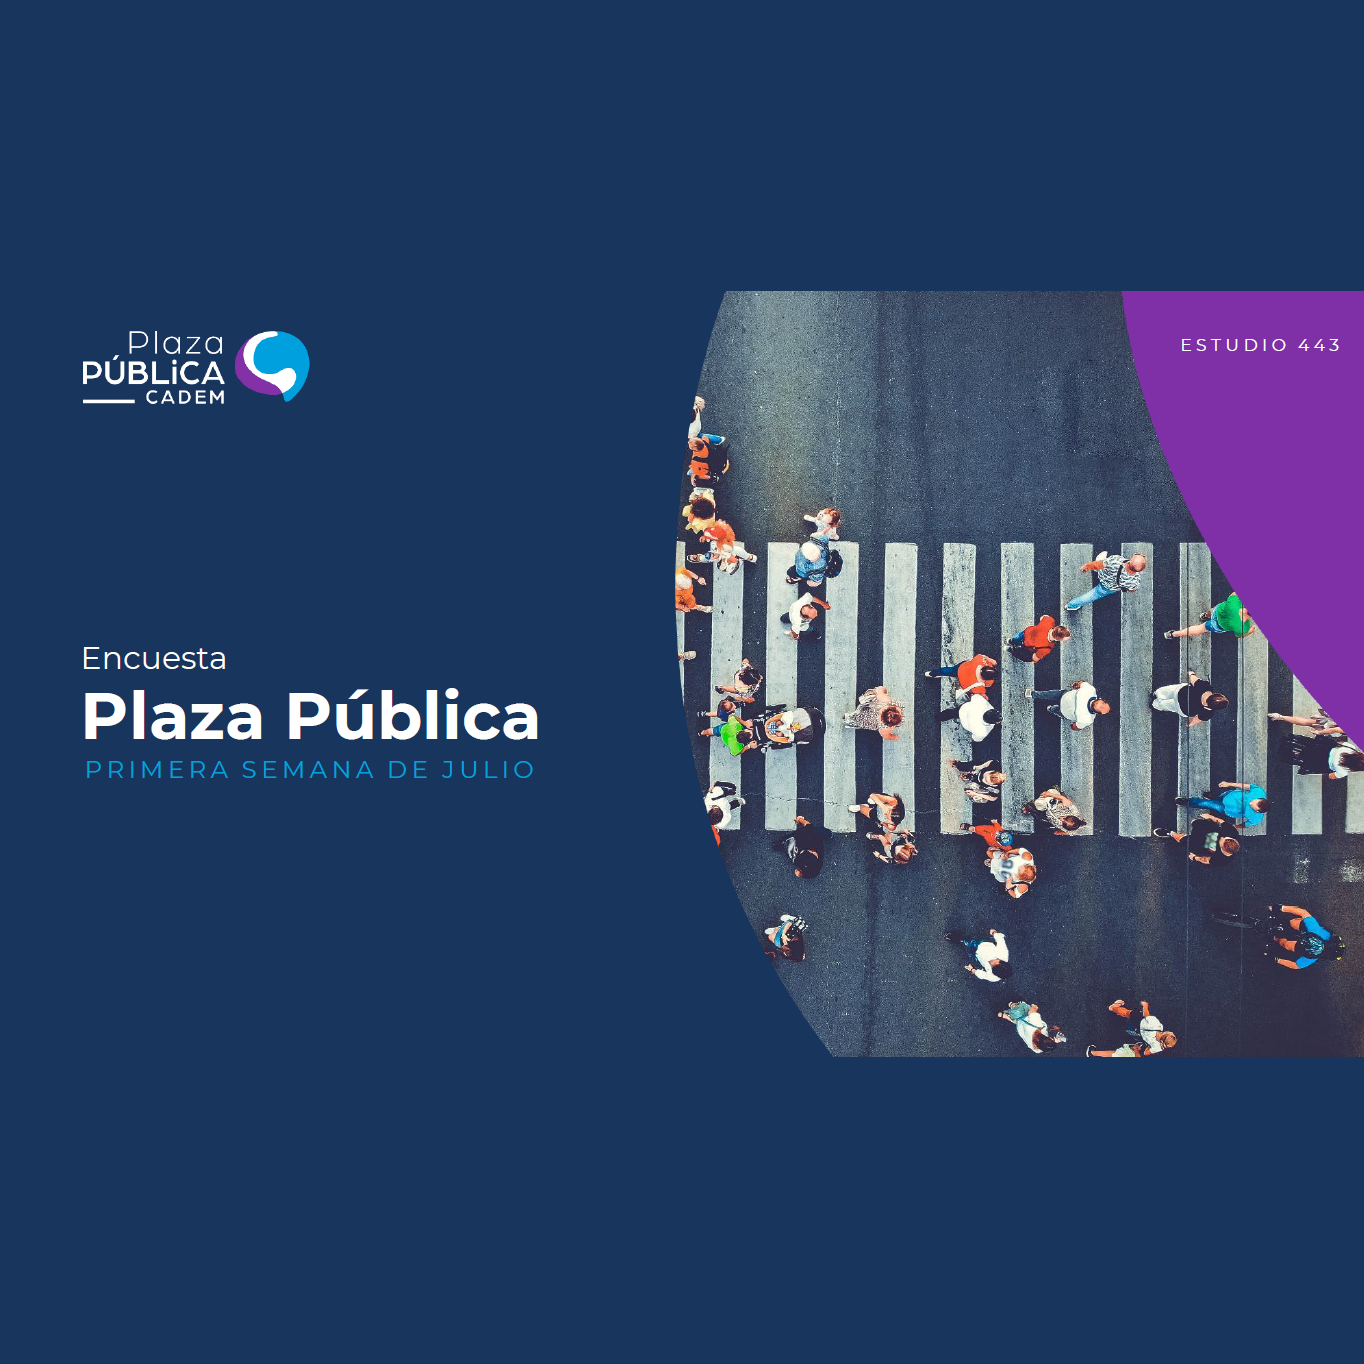 Plaza pública Cadem – Primera semana de julio